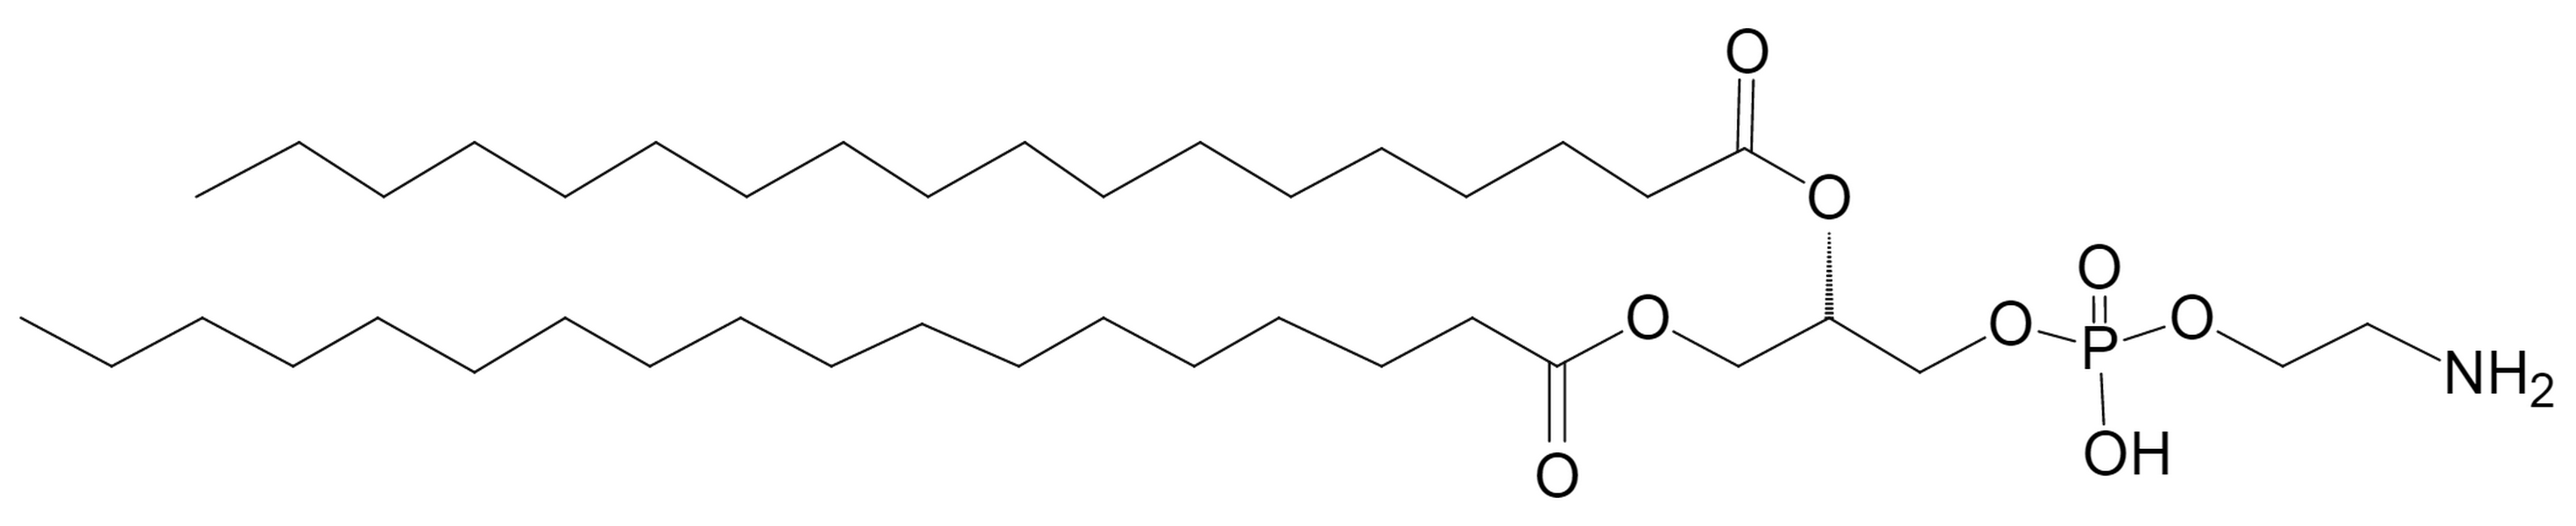 1,2-Distearoyl-sn-glycero-3-phosphoethanolamine